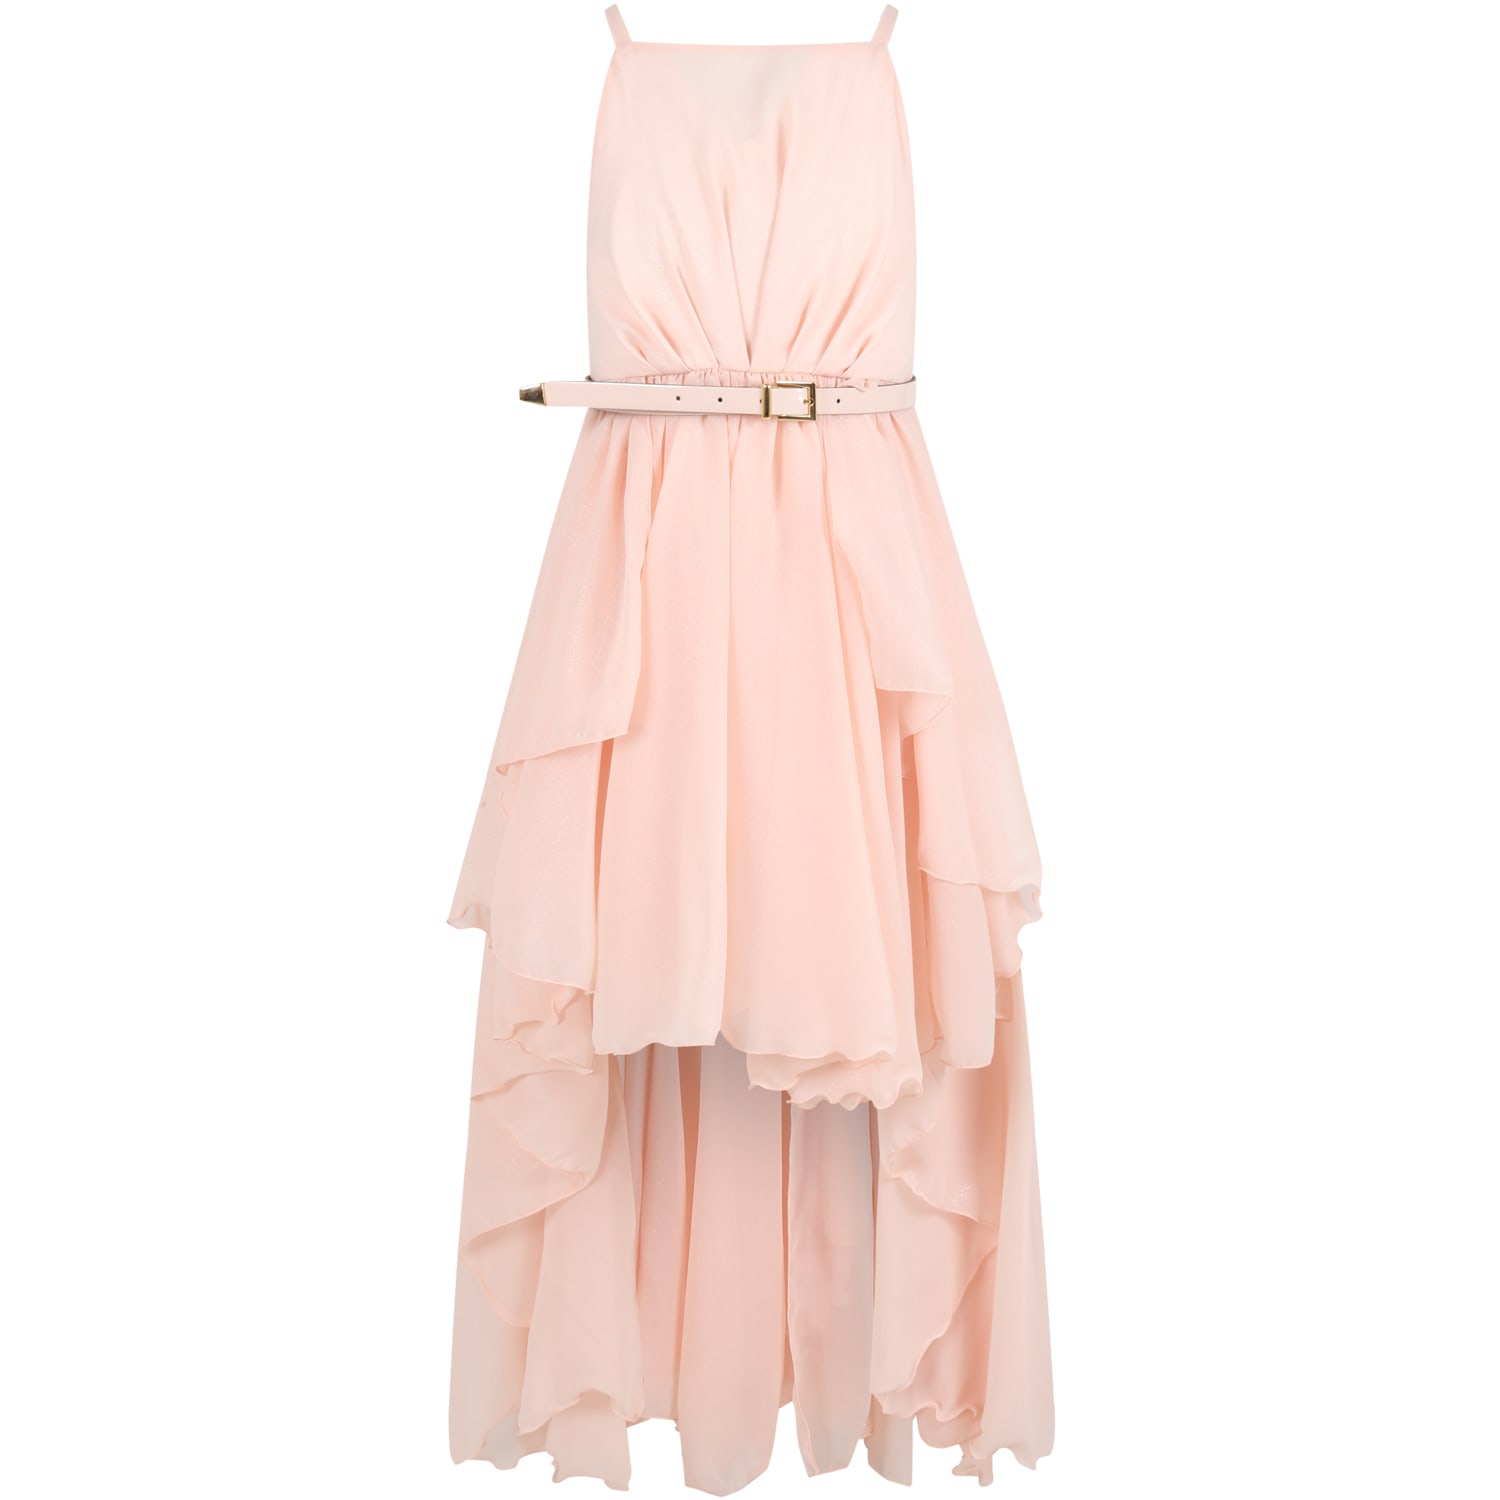 Le Gemelline by Feleppa Pink Dress For Girl